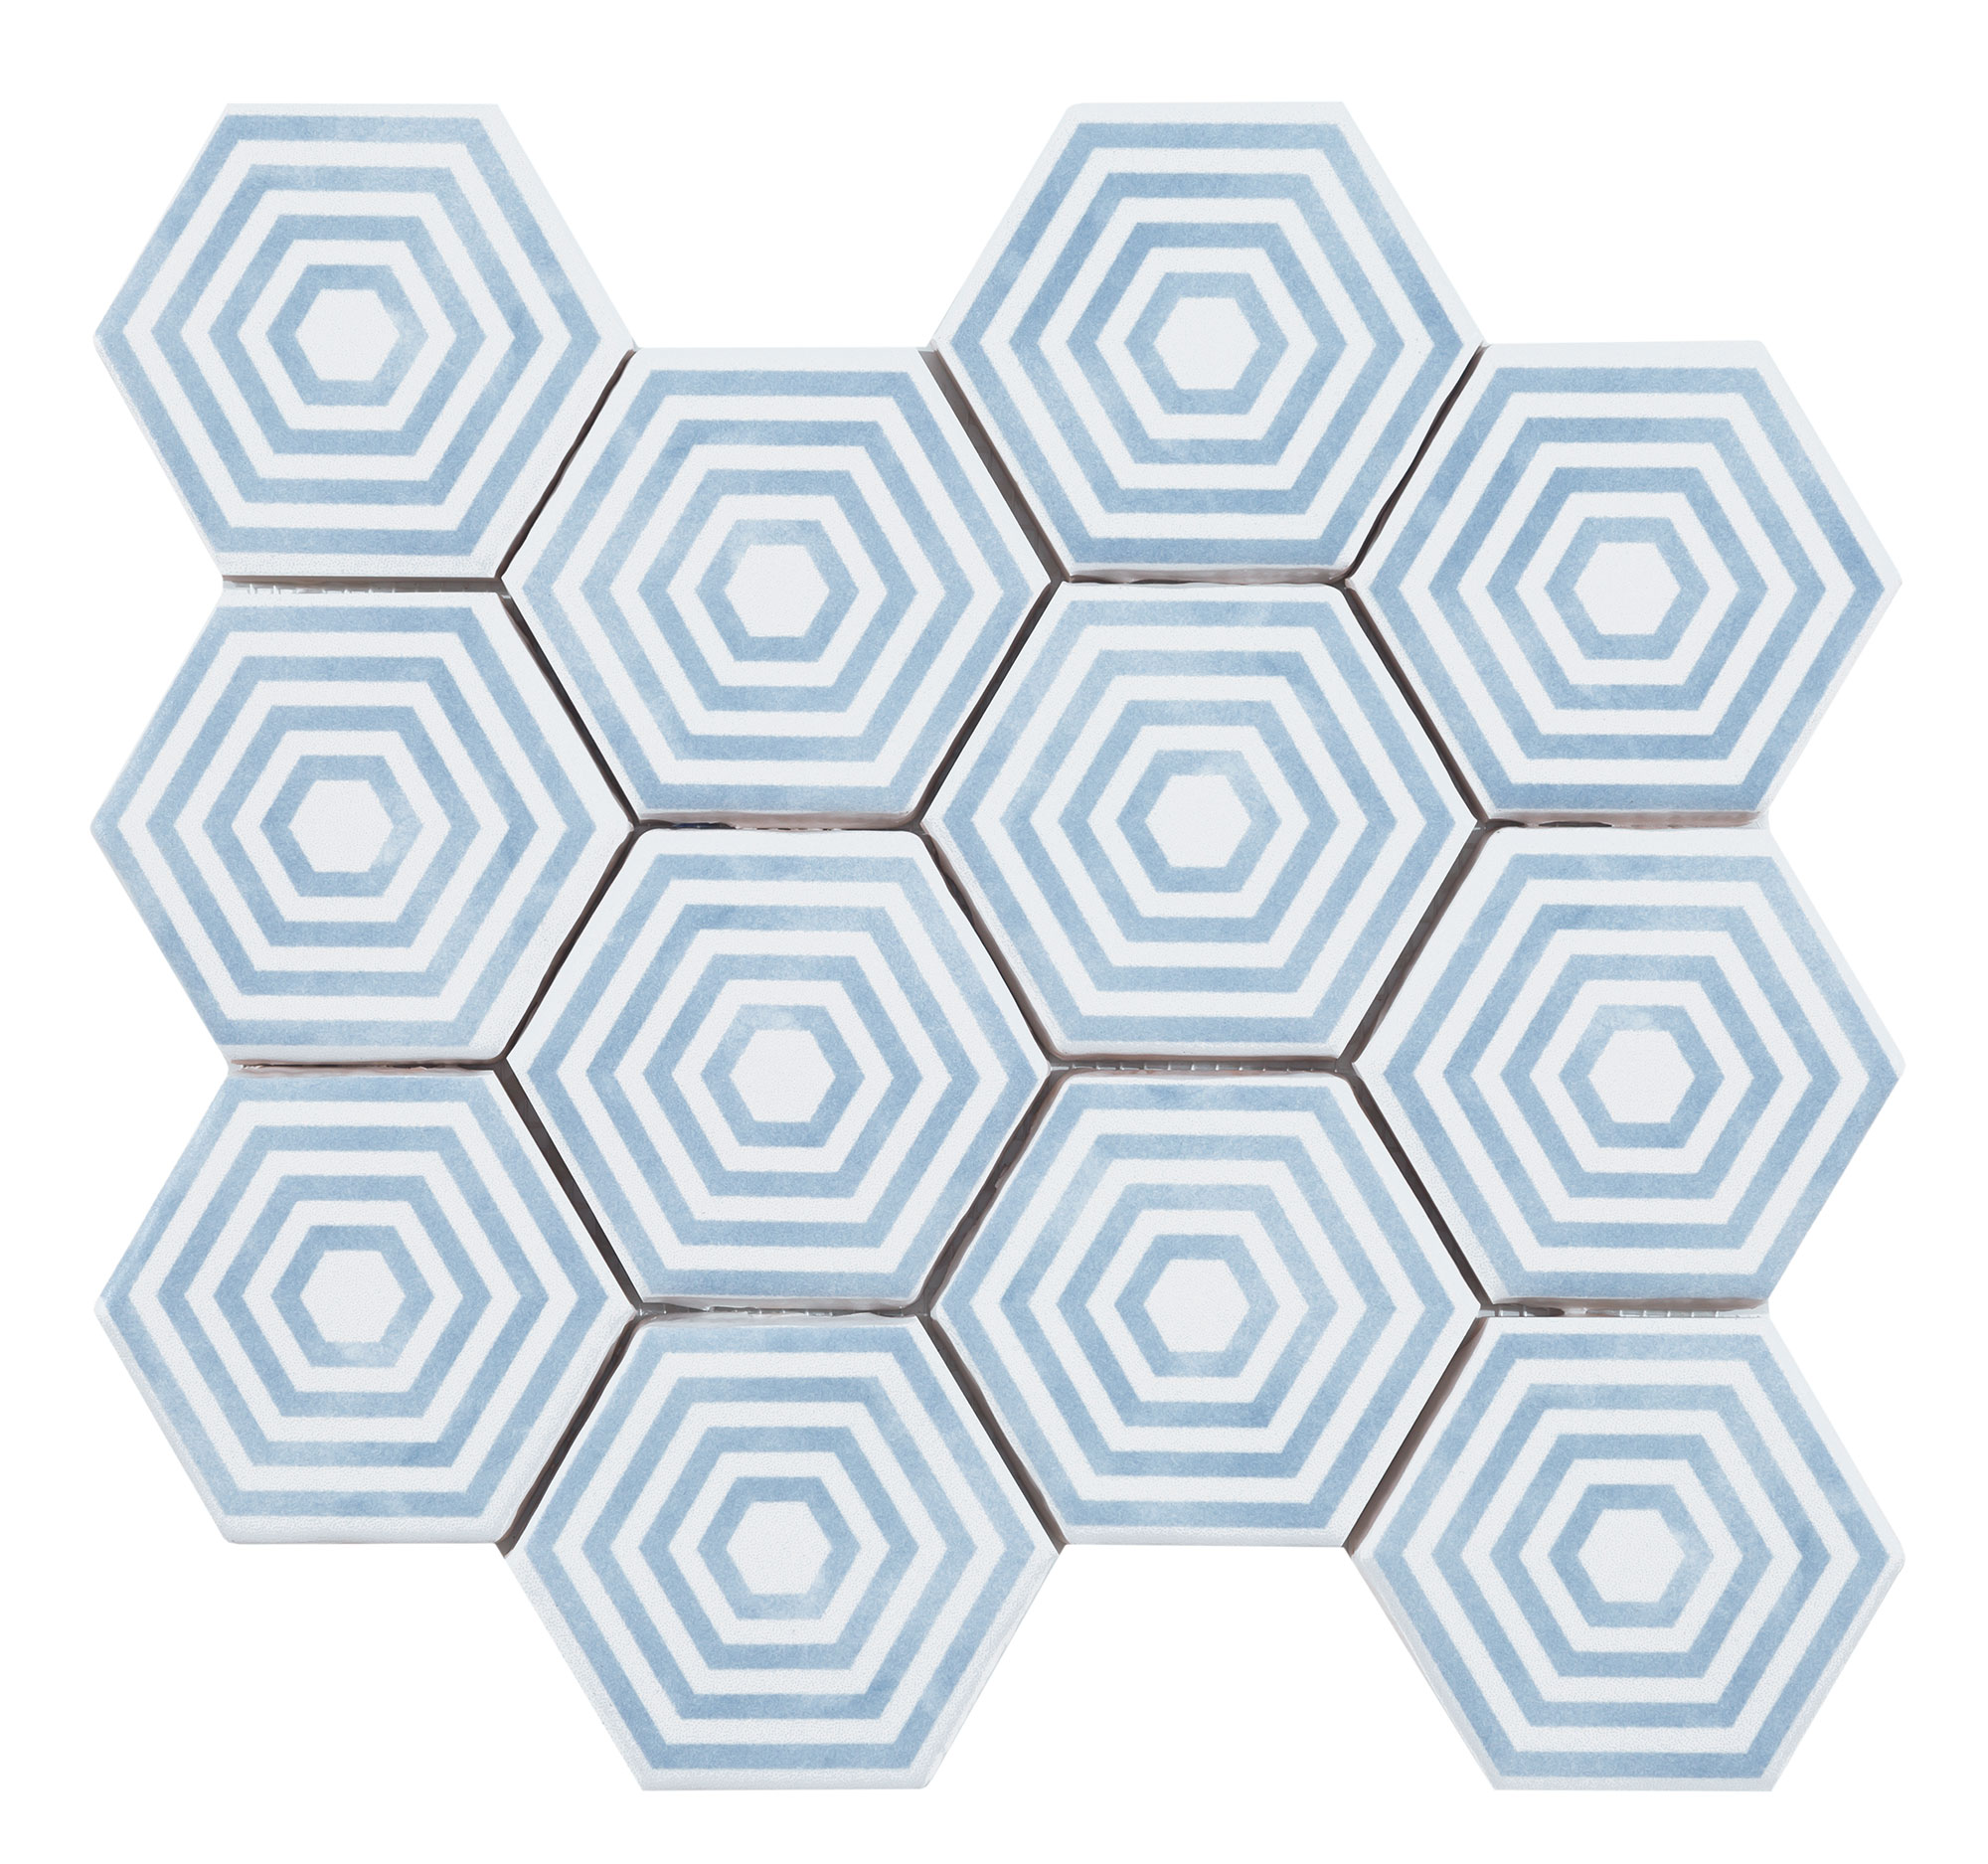 Природные гексагоны 4. Panal Hexagon Cevica. Плитка Гексагон. Homework Hexagon small плитка. Гексагон плитка Тиффани.